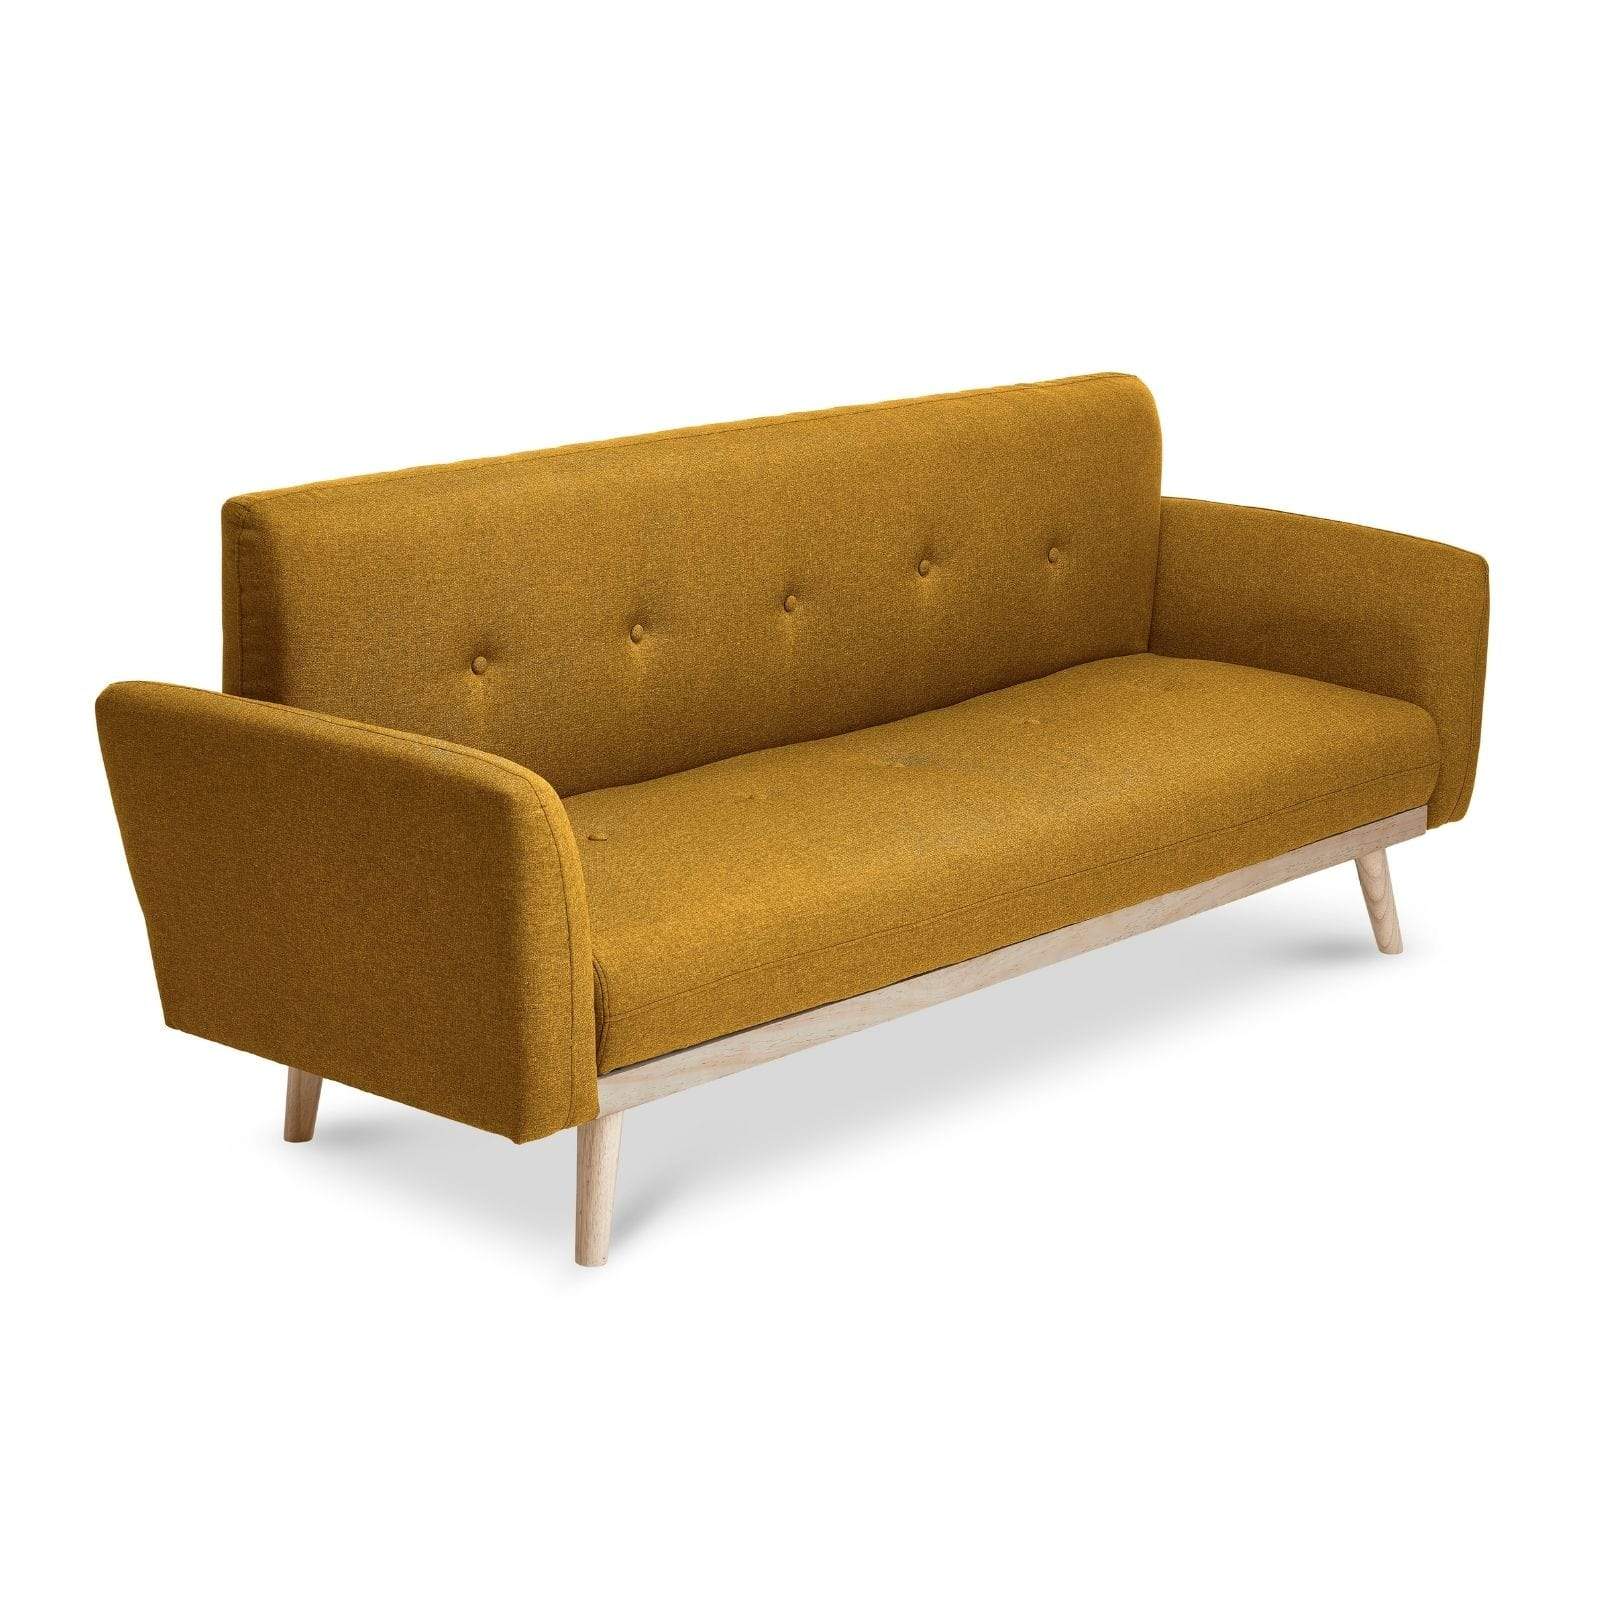 Nicholas 3-Seater Yellow Foldable Sofa Bed - Newstart Furniture